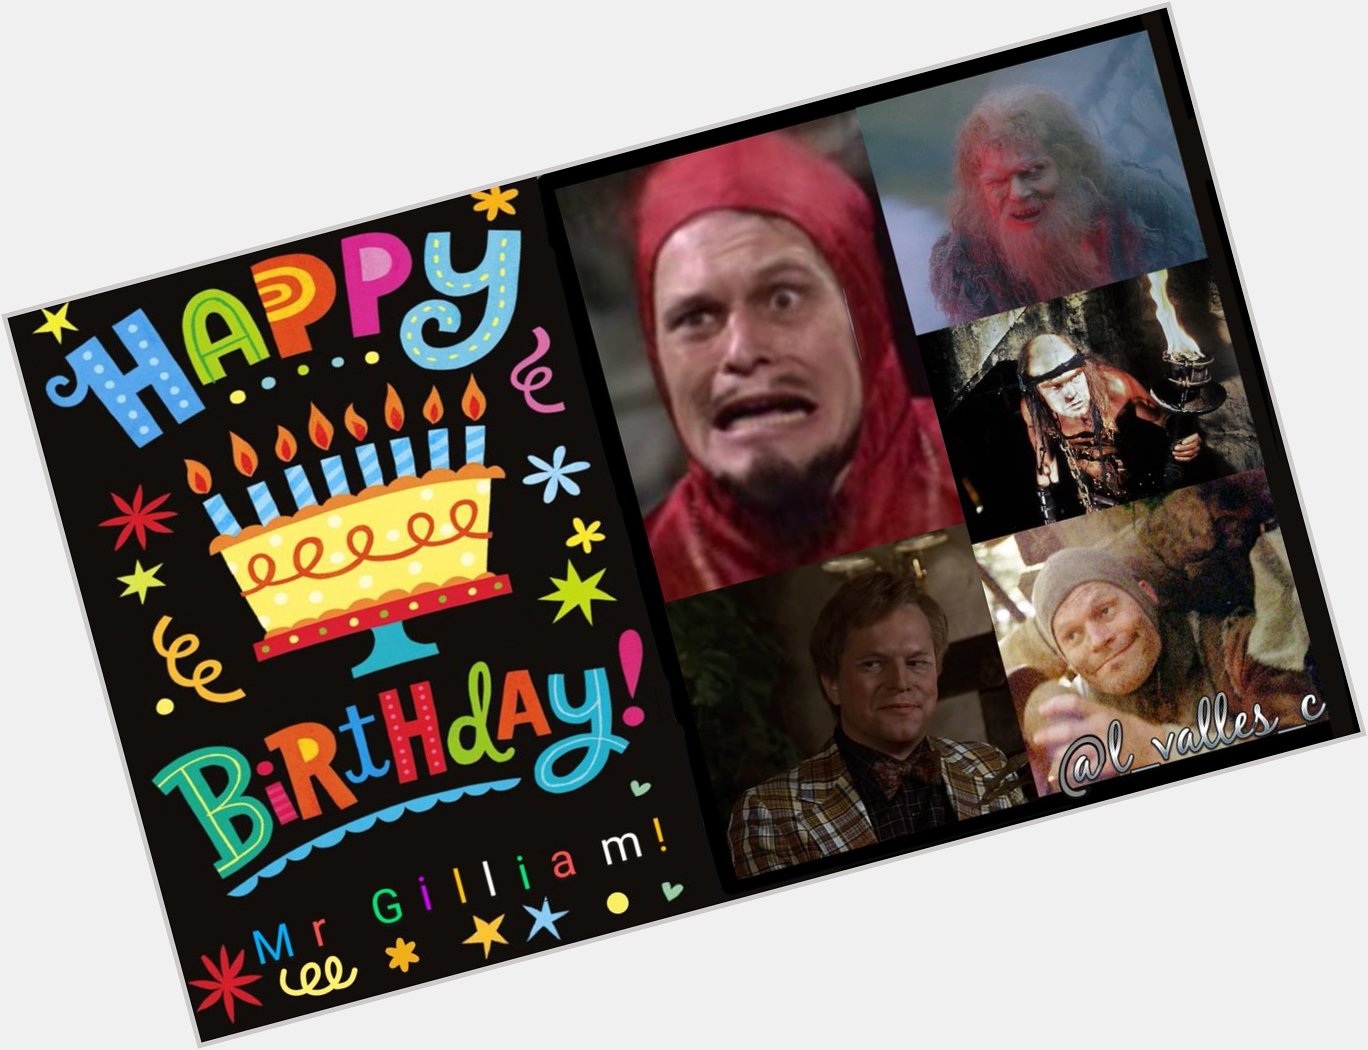    Mr Terry Gilliam  !       Happy 18th Birthday!
Have a wonderful day! 